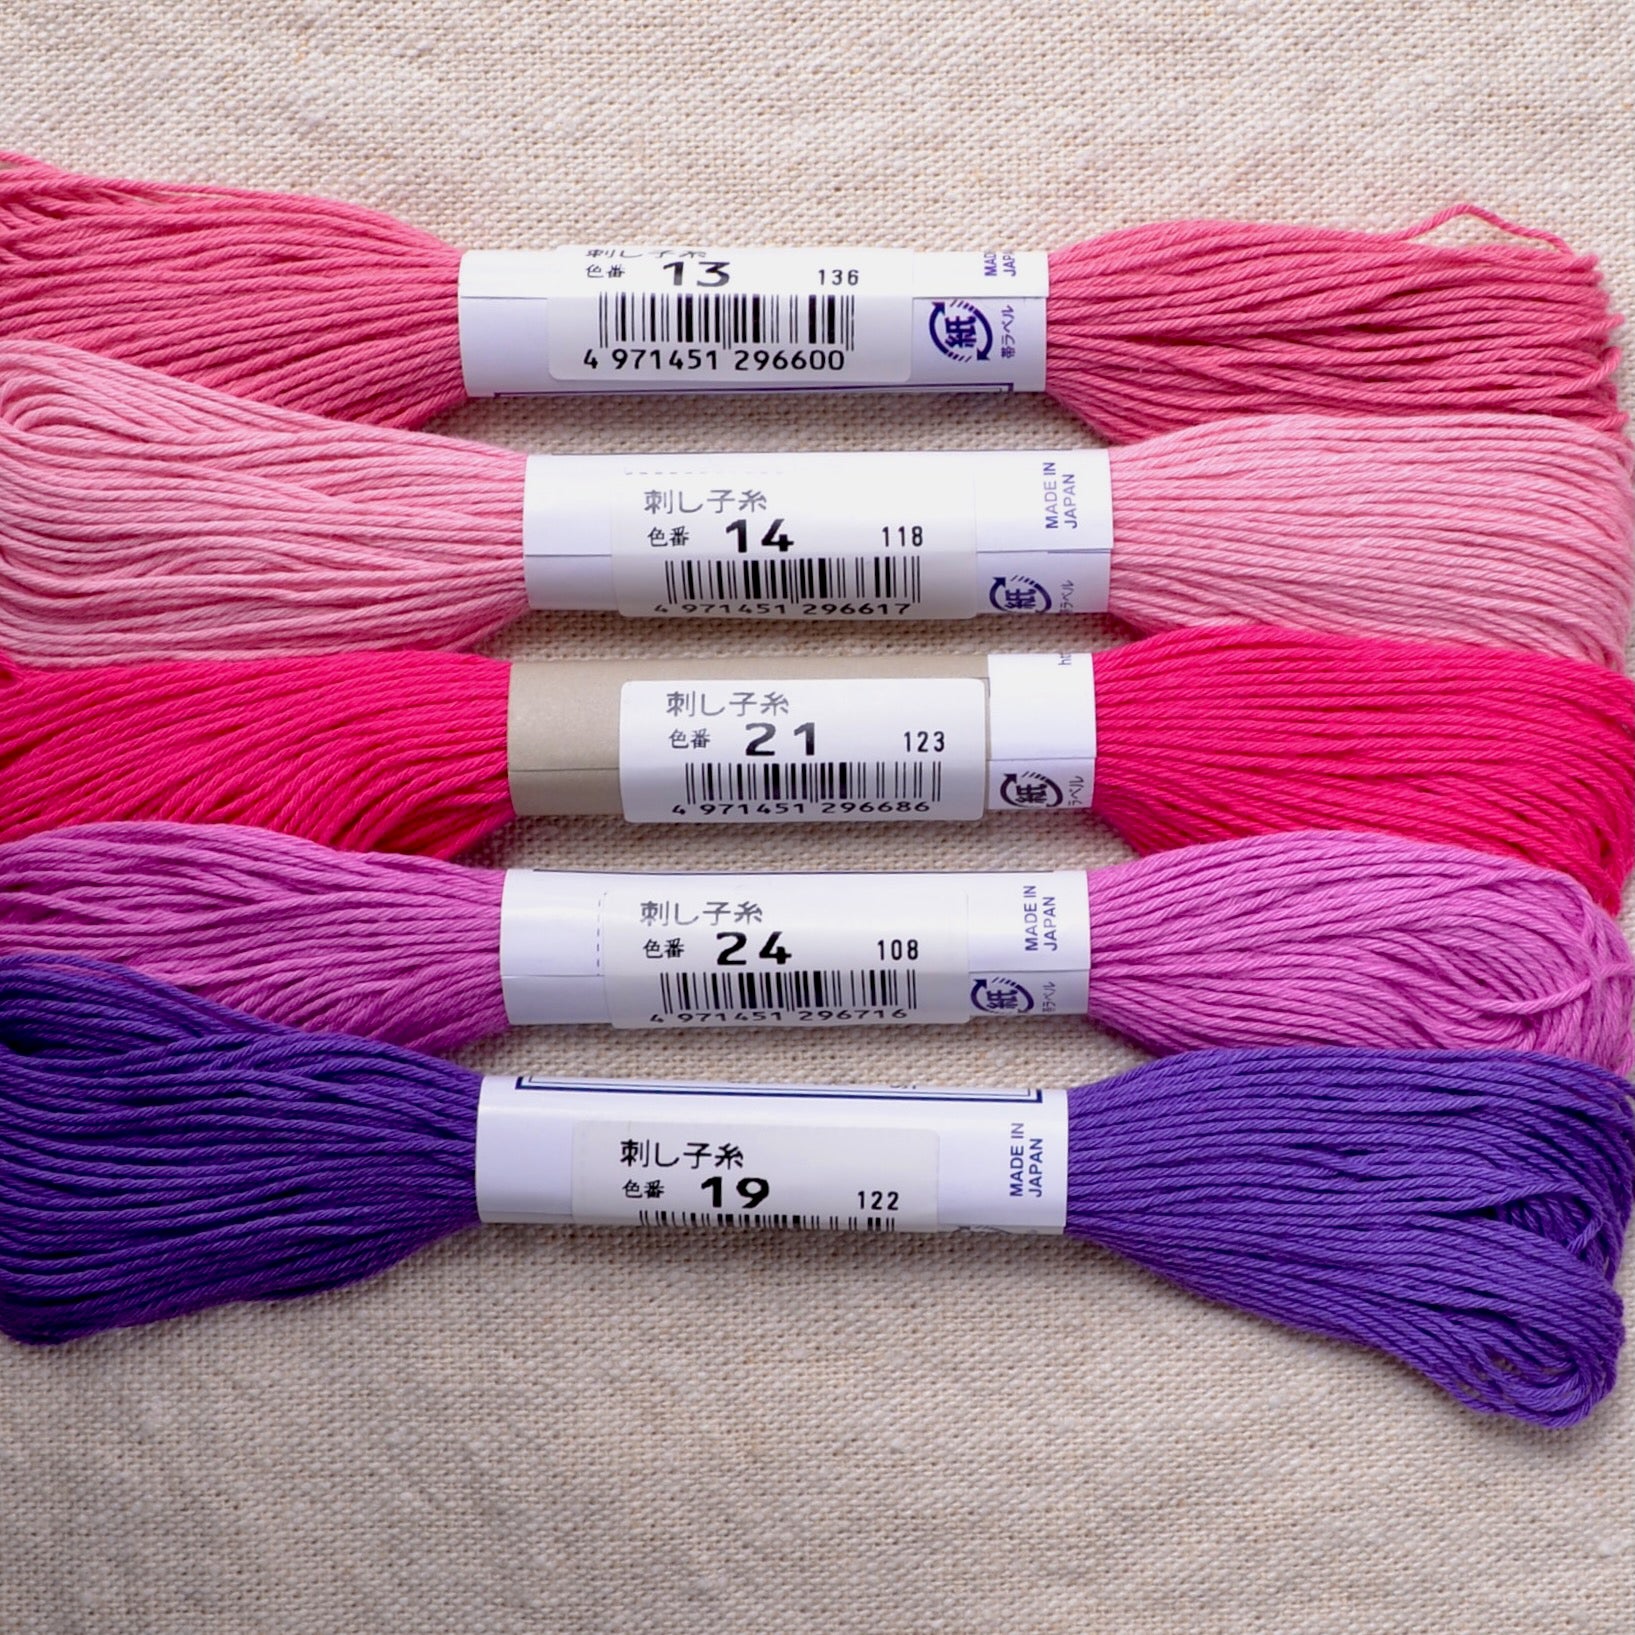 sashiko threads, pinks and purples